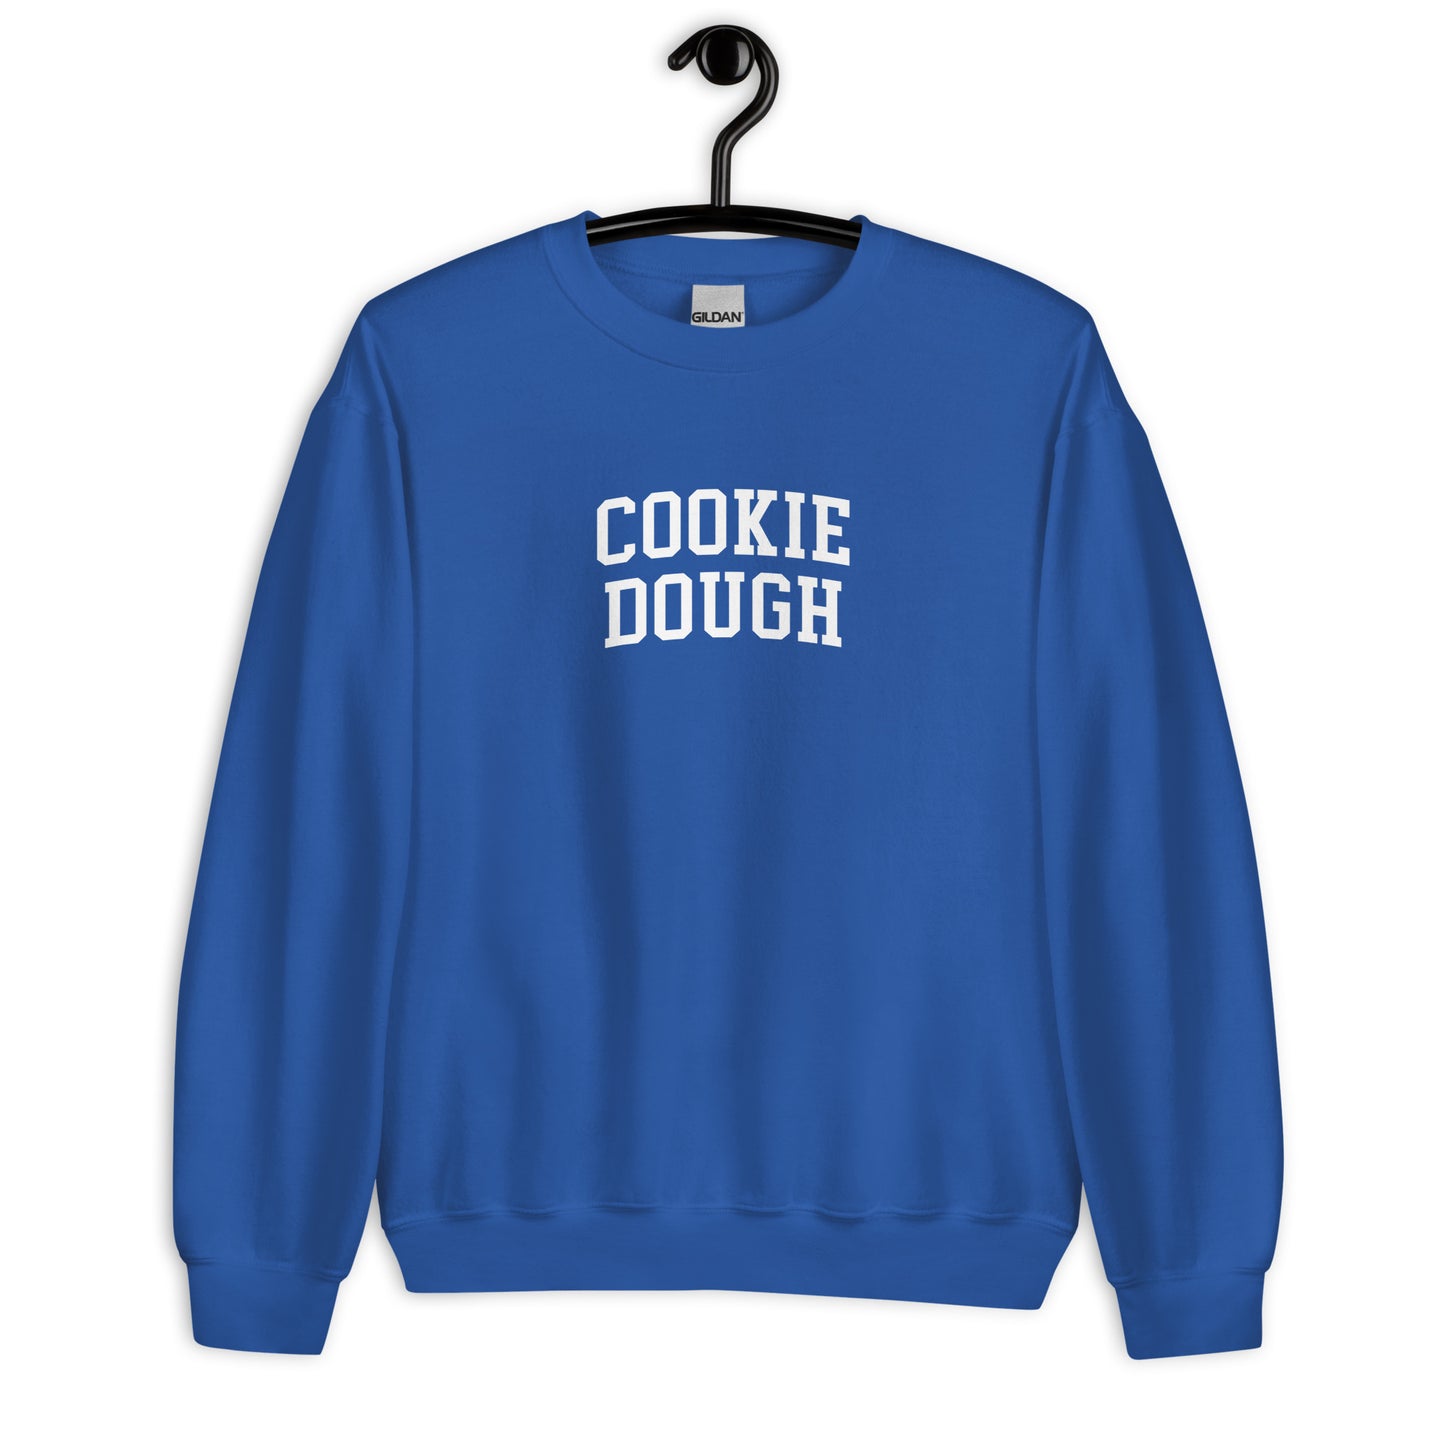 Cookie Dough Sweatshirt - Arched Font